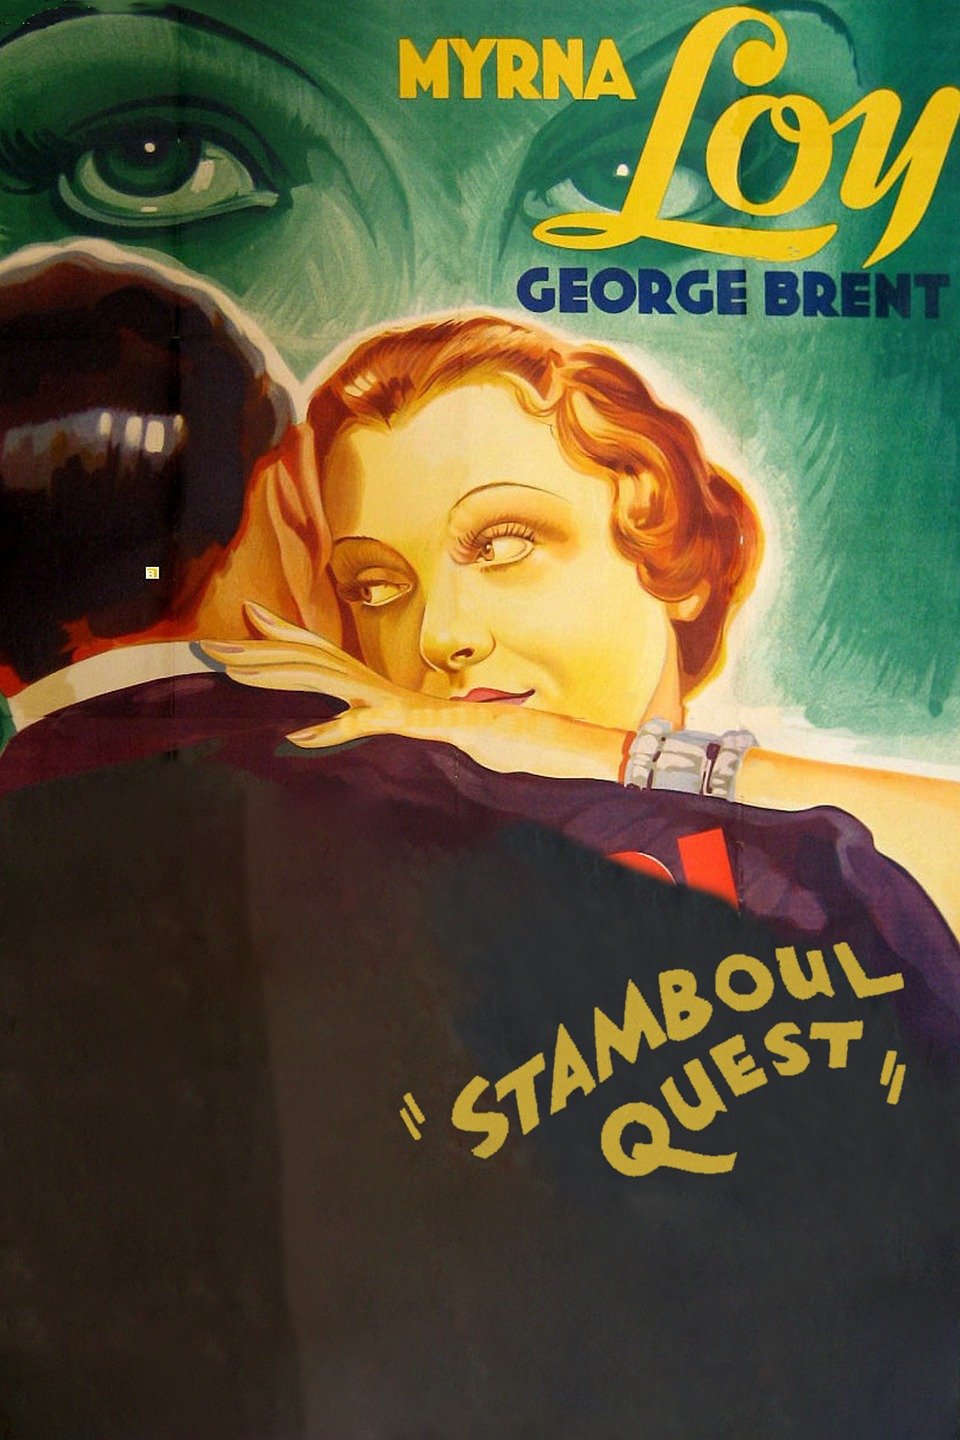 Stamboul Quest (1934) starring Myrna Loy on DVD on DVD